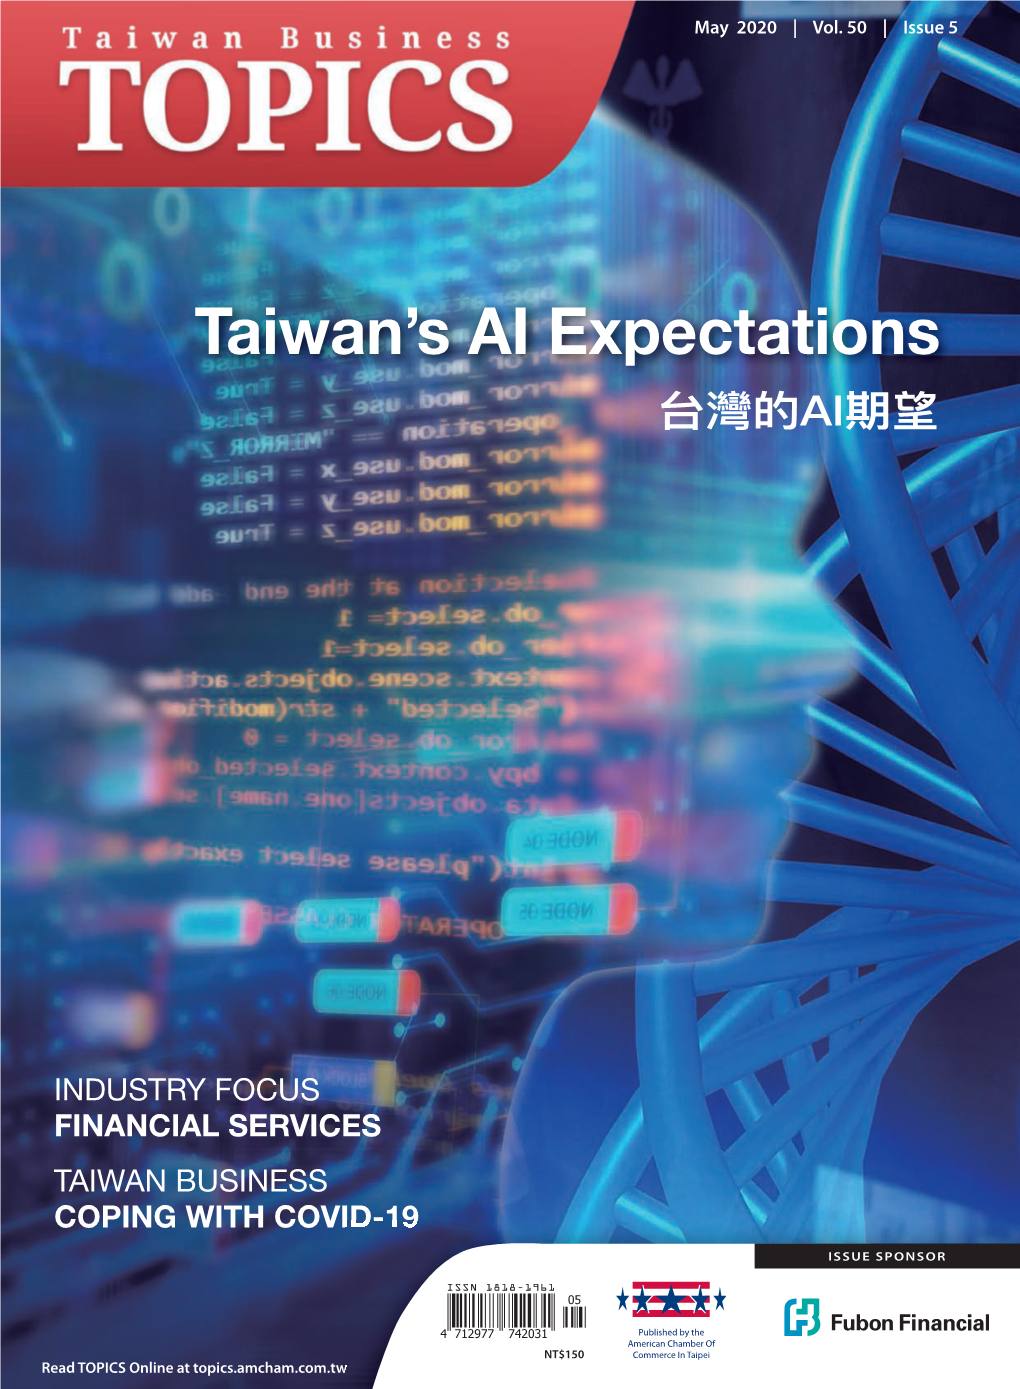 Taiwan's AI Expectations